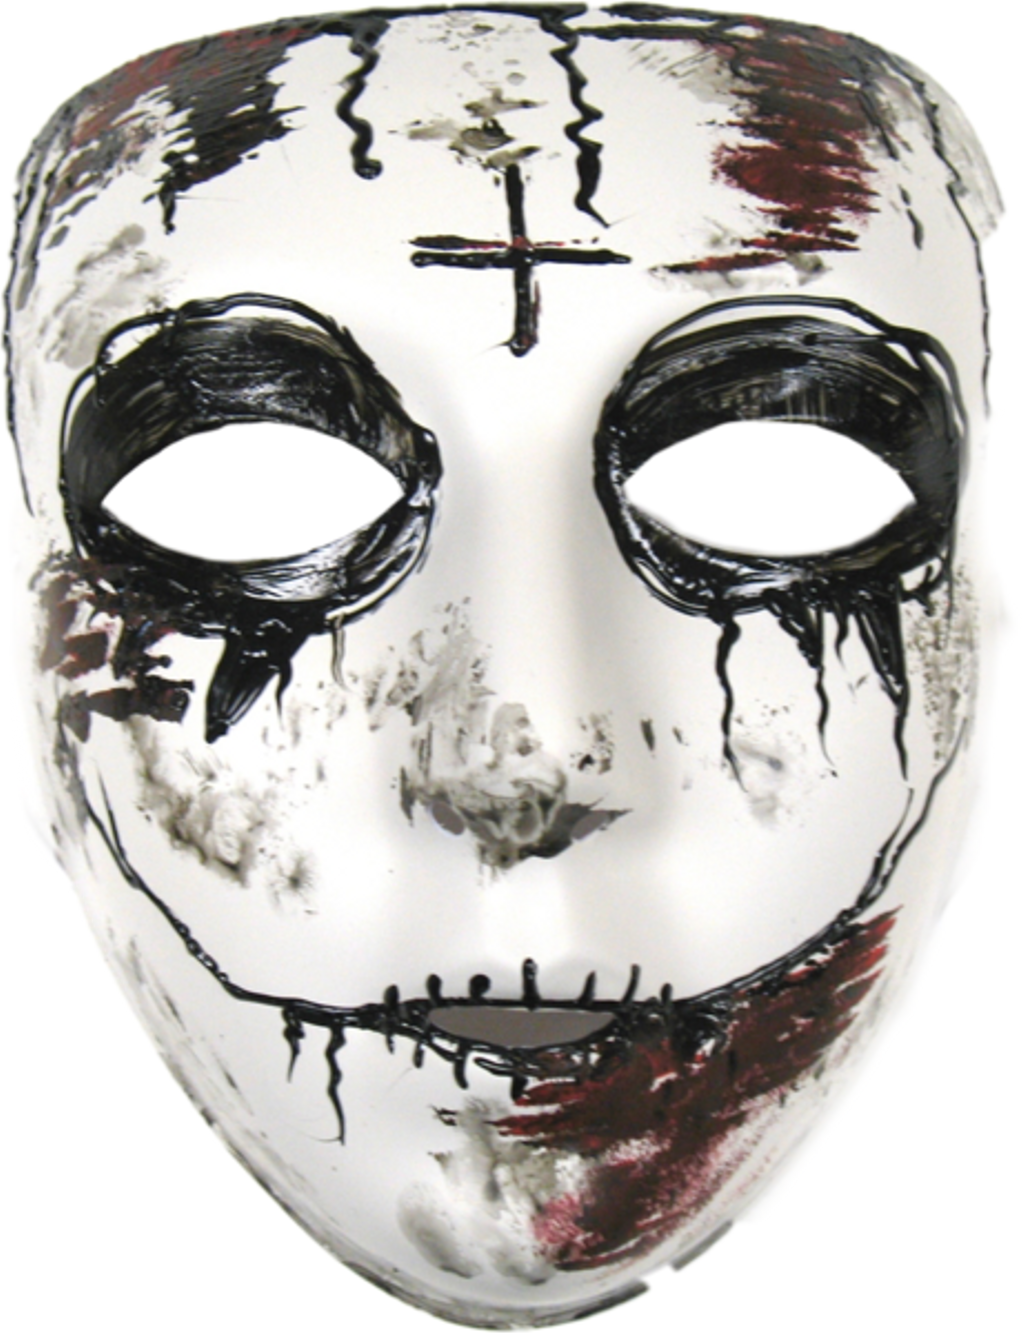 Purge Transparent Mask - Transparent Purge Mask Png Clipart (1024x1333), Png Download